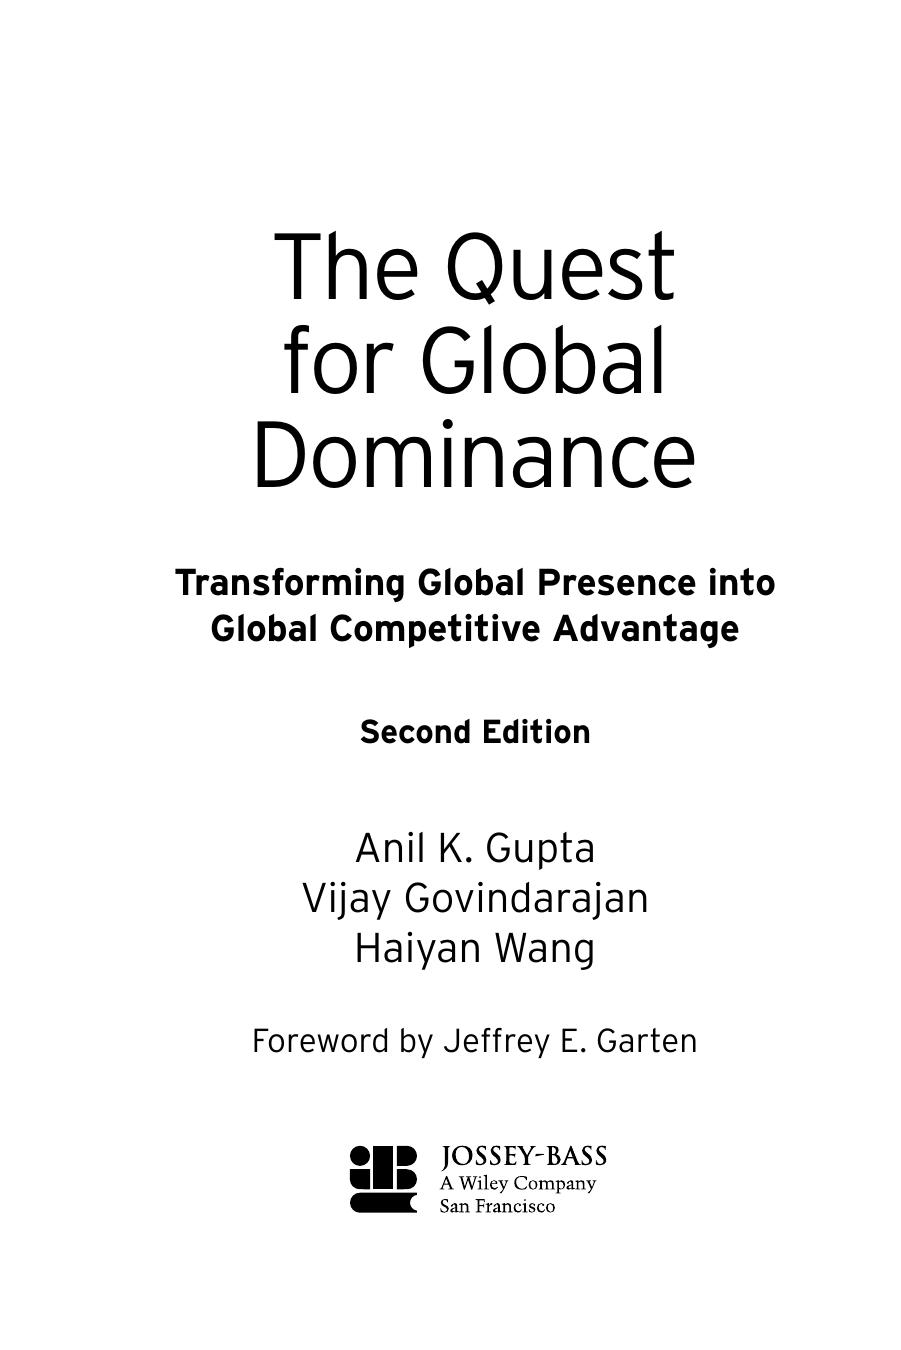 Anil_K._Gupta,_Vijay_Govindarajan,_Haiyan_Wang_The_Quest_for_Global_Dominance_Transforming_Global_Presence_into_Global_Competitive_Advantage__2008